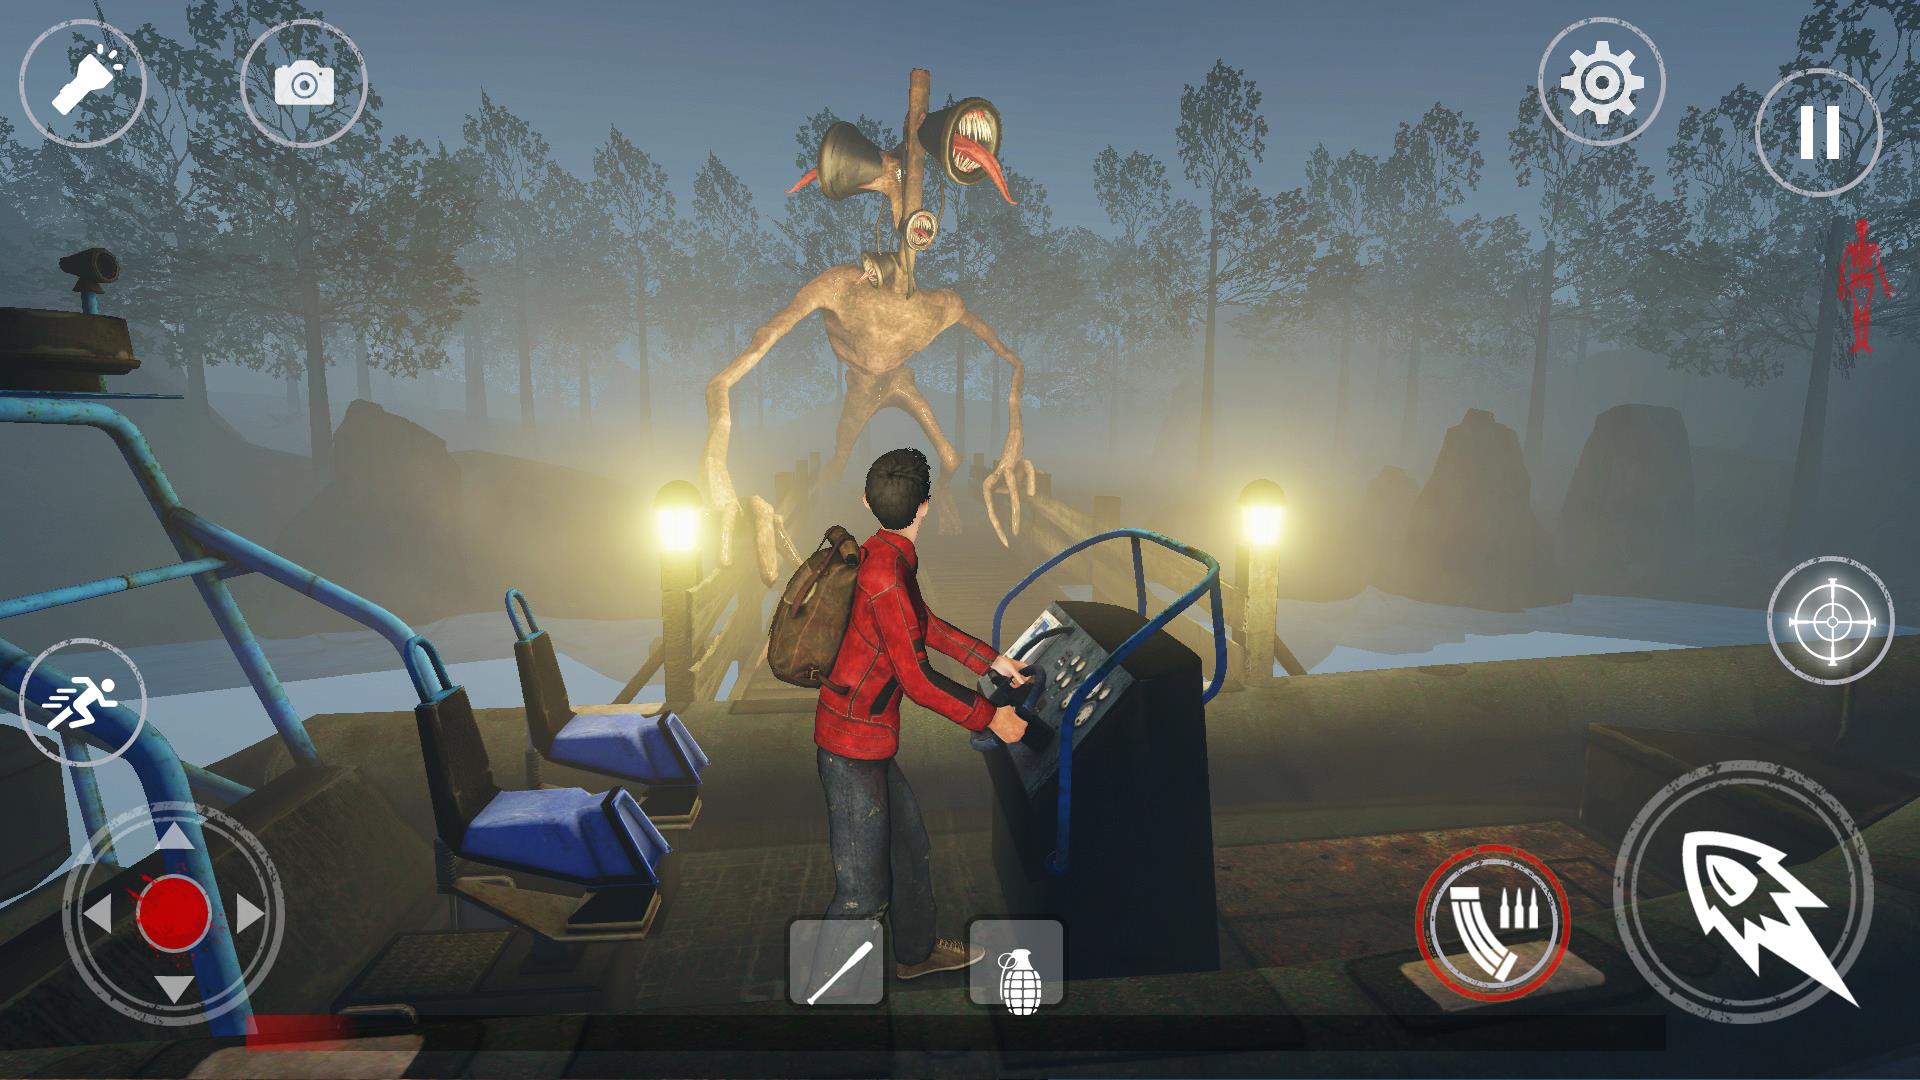 Siren Scary Head - Horror Game Screenshot 15